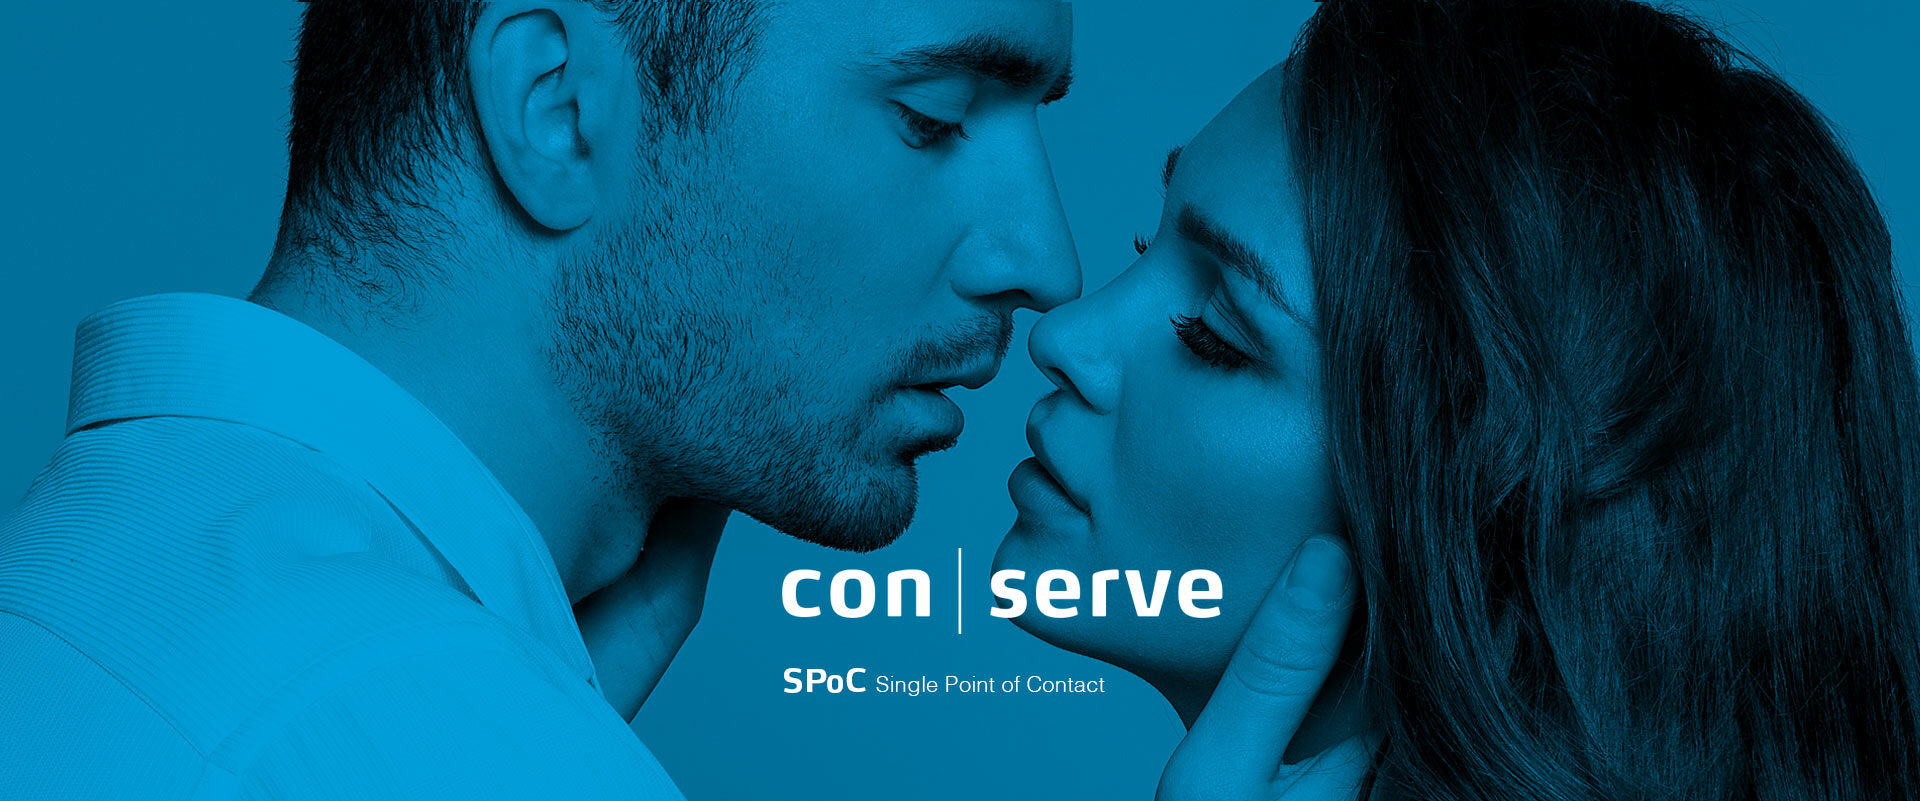 Internetagentur Bonn responsive Webdesign für Conserve